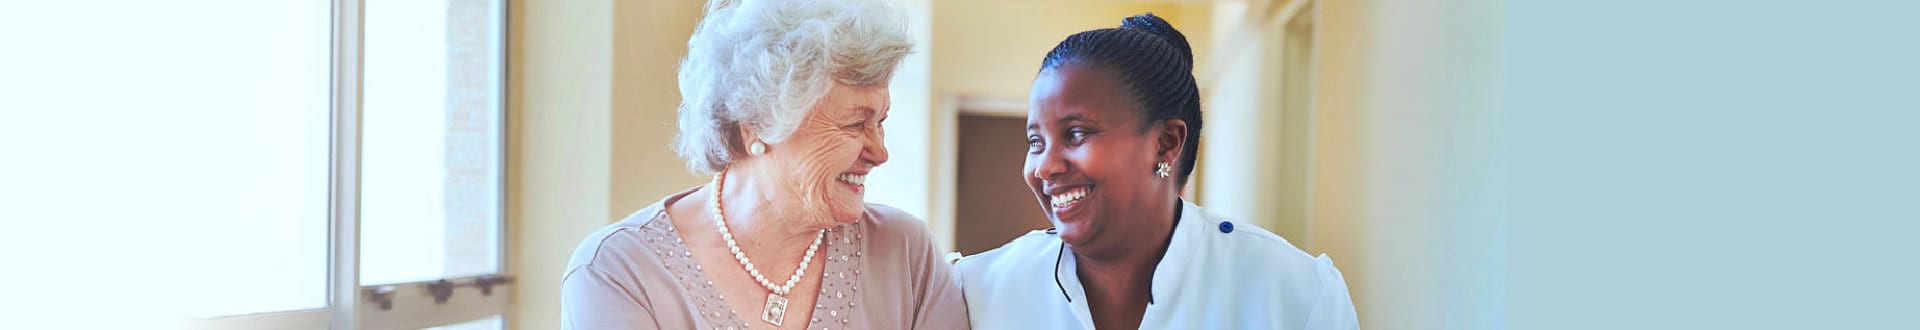 senior woman smiling with caregiver